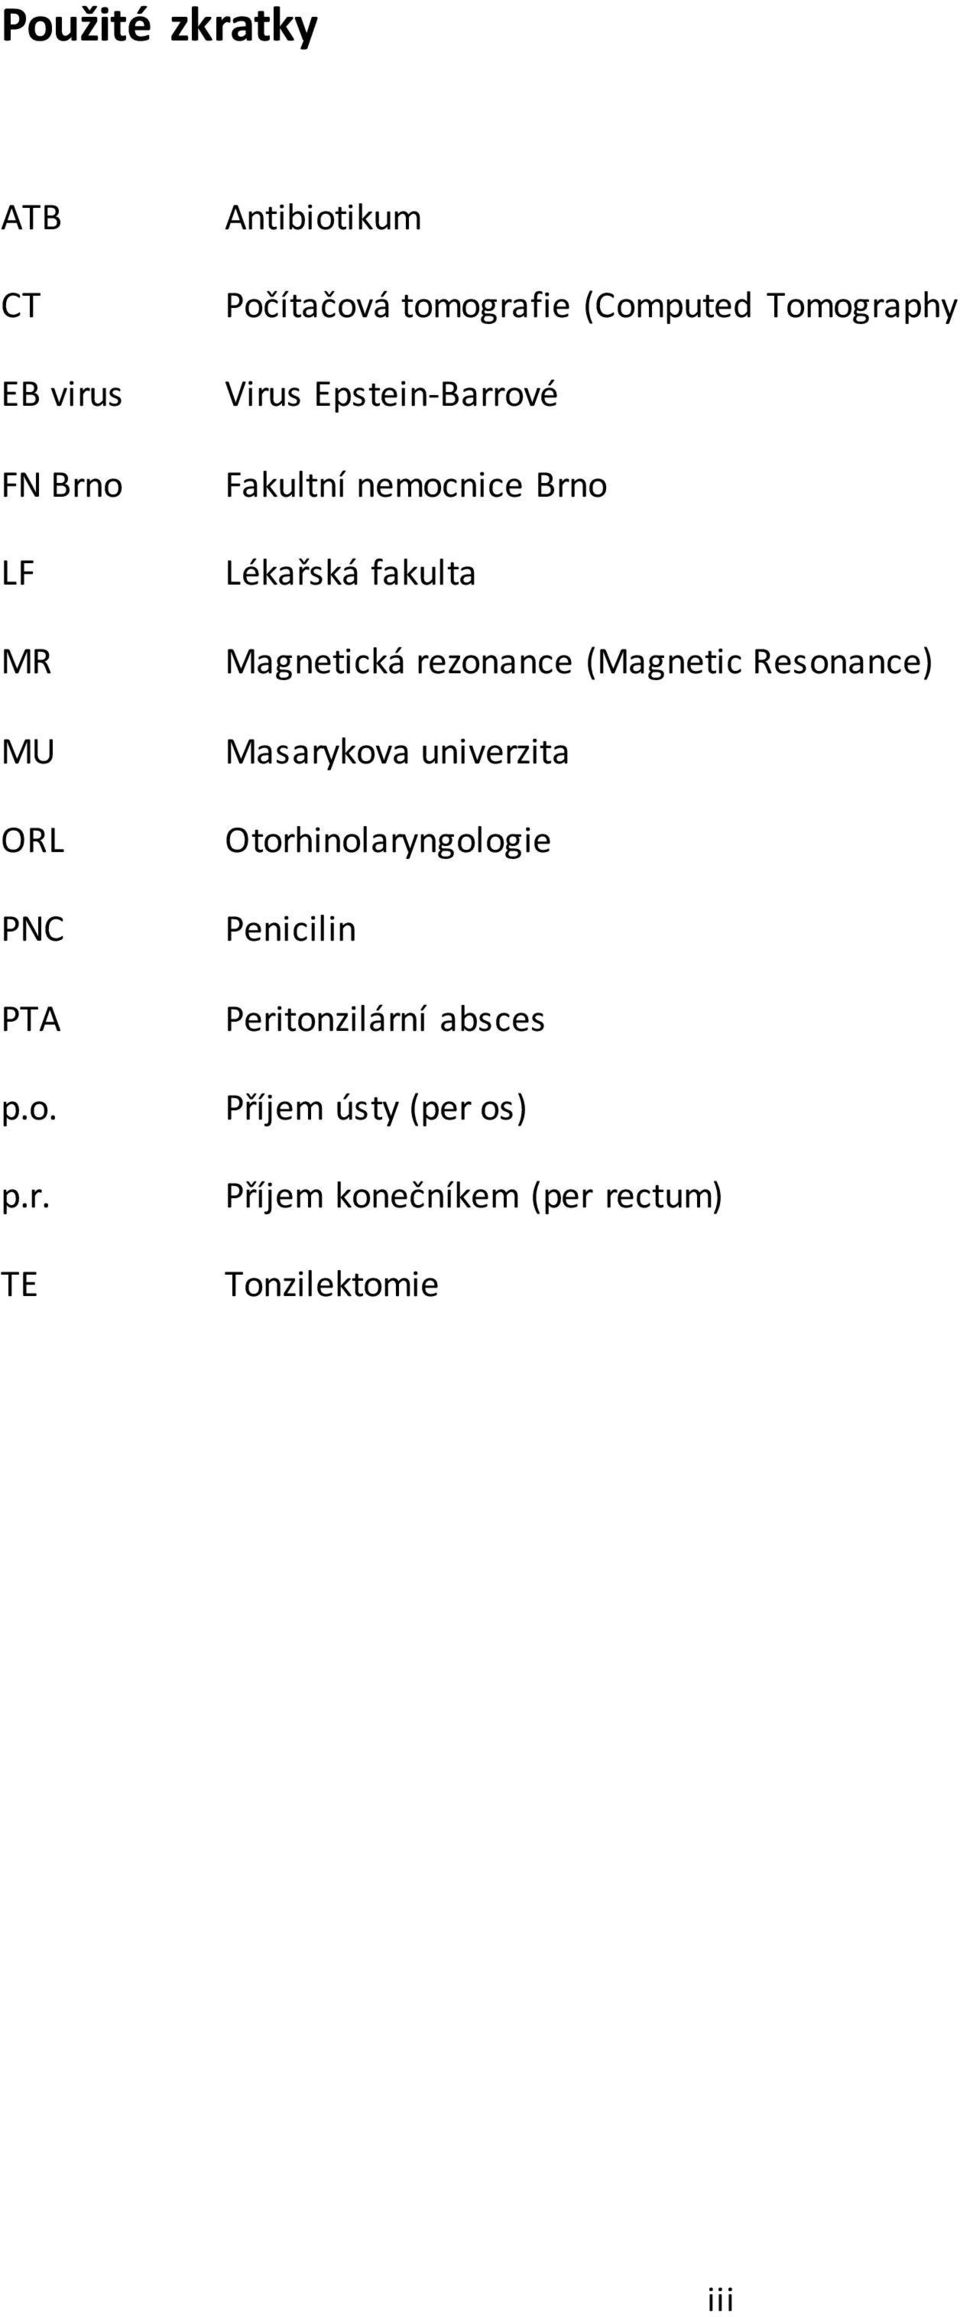 (Magnetic Resonance) MU Masarykova univerzita ORL Otorhinolaryngologie PNC Penicilin PTA